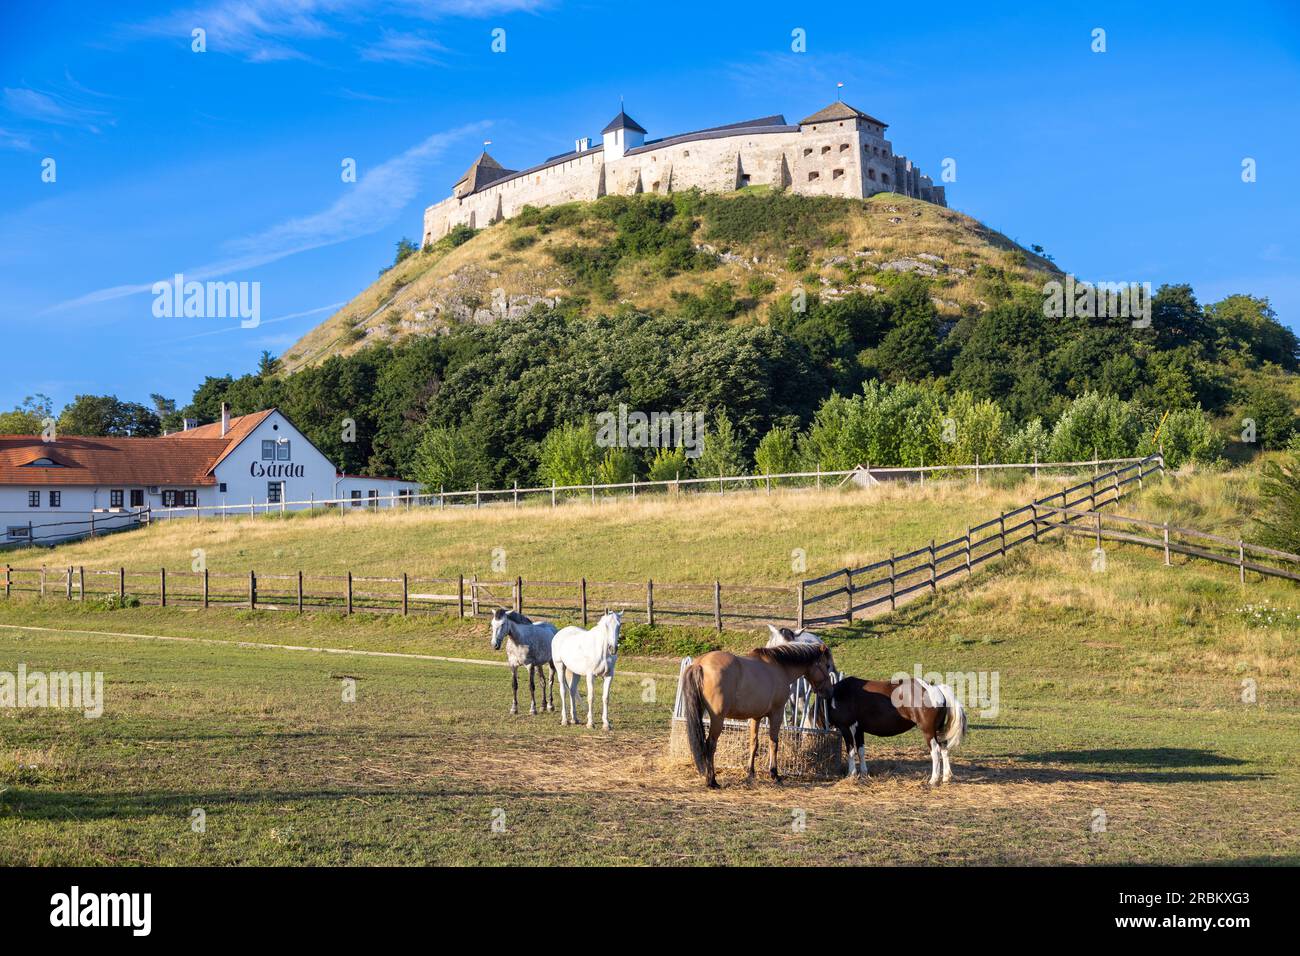 gotický hrad Sümeg, Jezero Balaton rekreační oblast, Maďarsko / gothic Sümeg Castle, lake Balaton reacreation area, Hungary, Europe Stock Photo